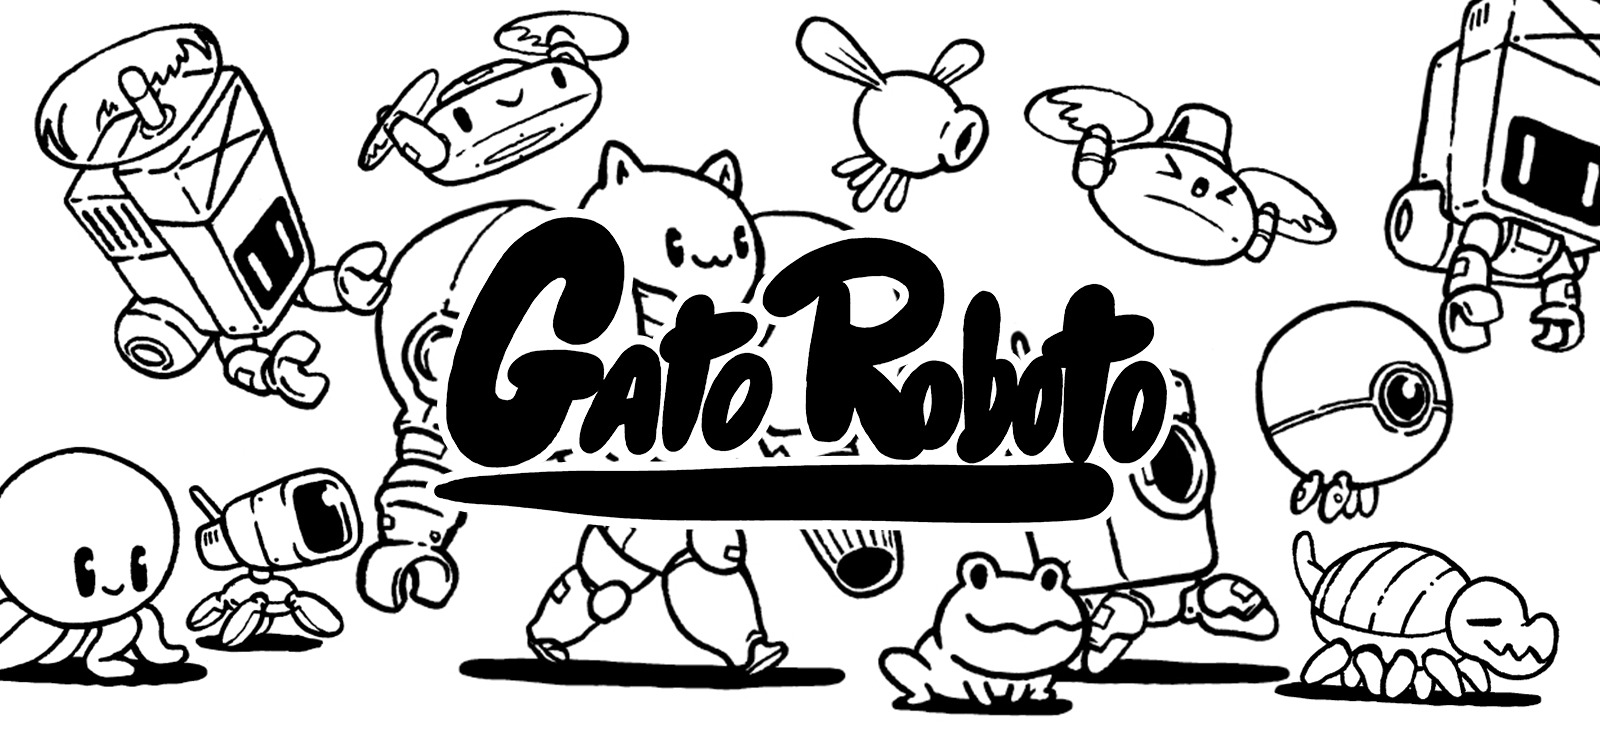 download free gato roboto game